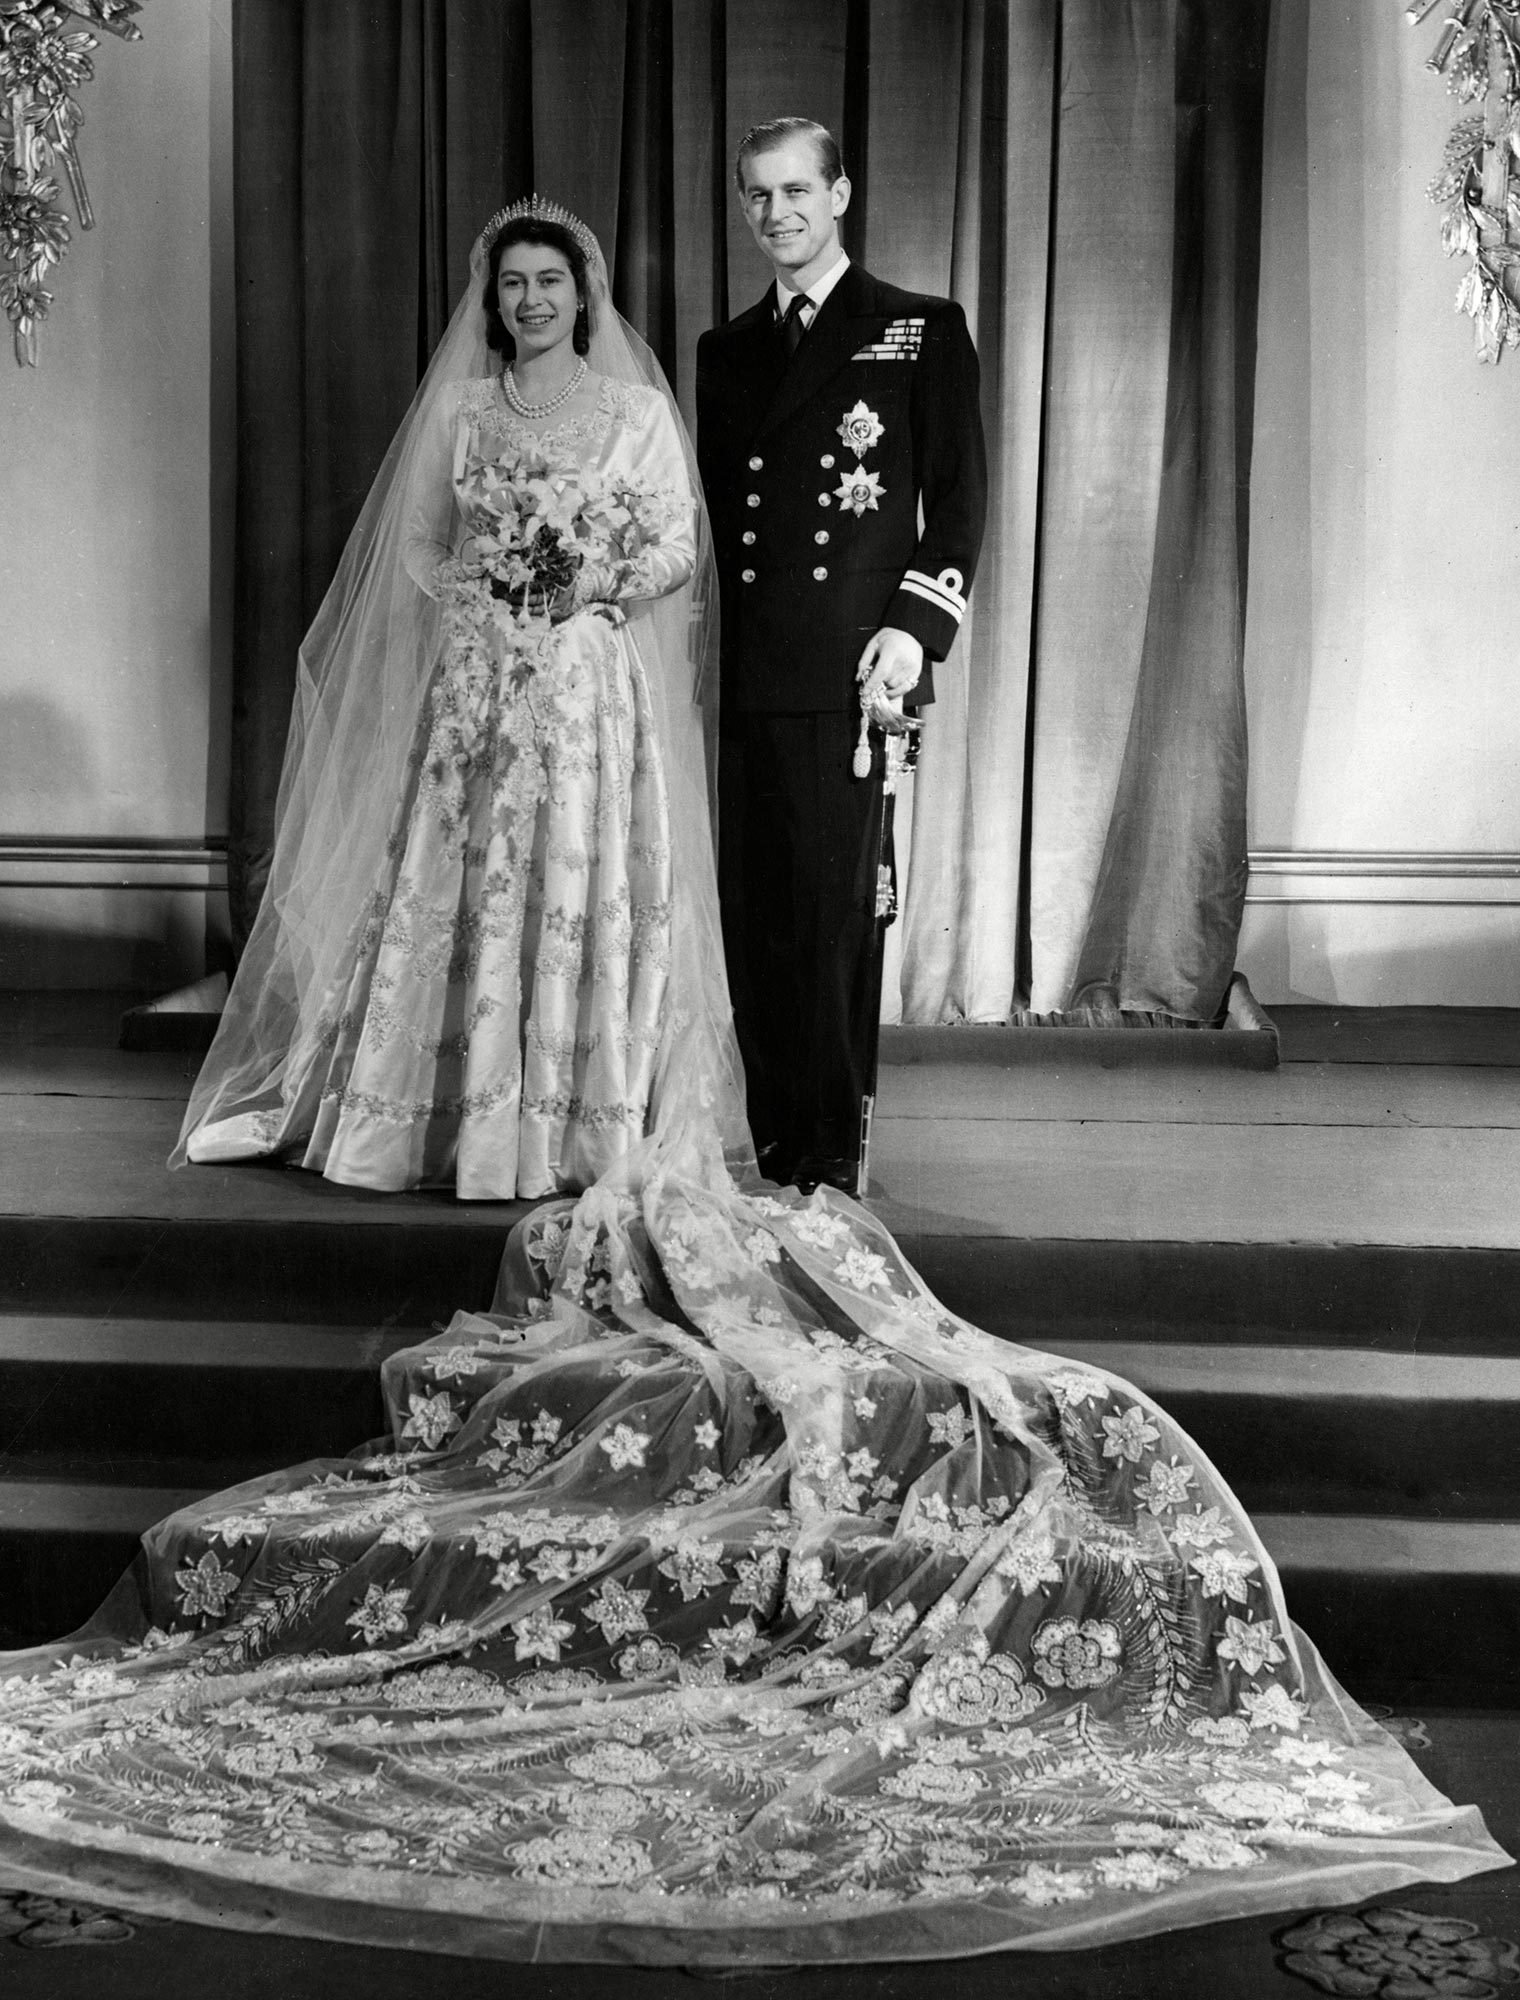 Queen Elizabeth II and Prince Philip marriage